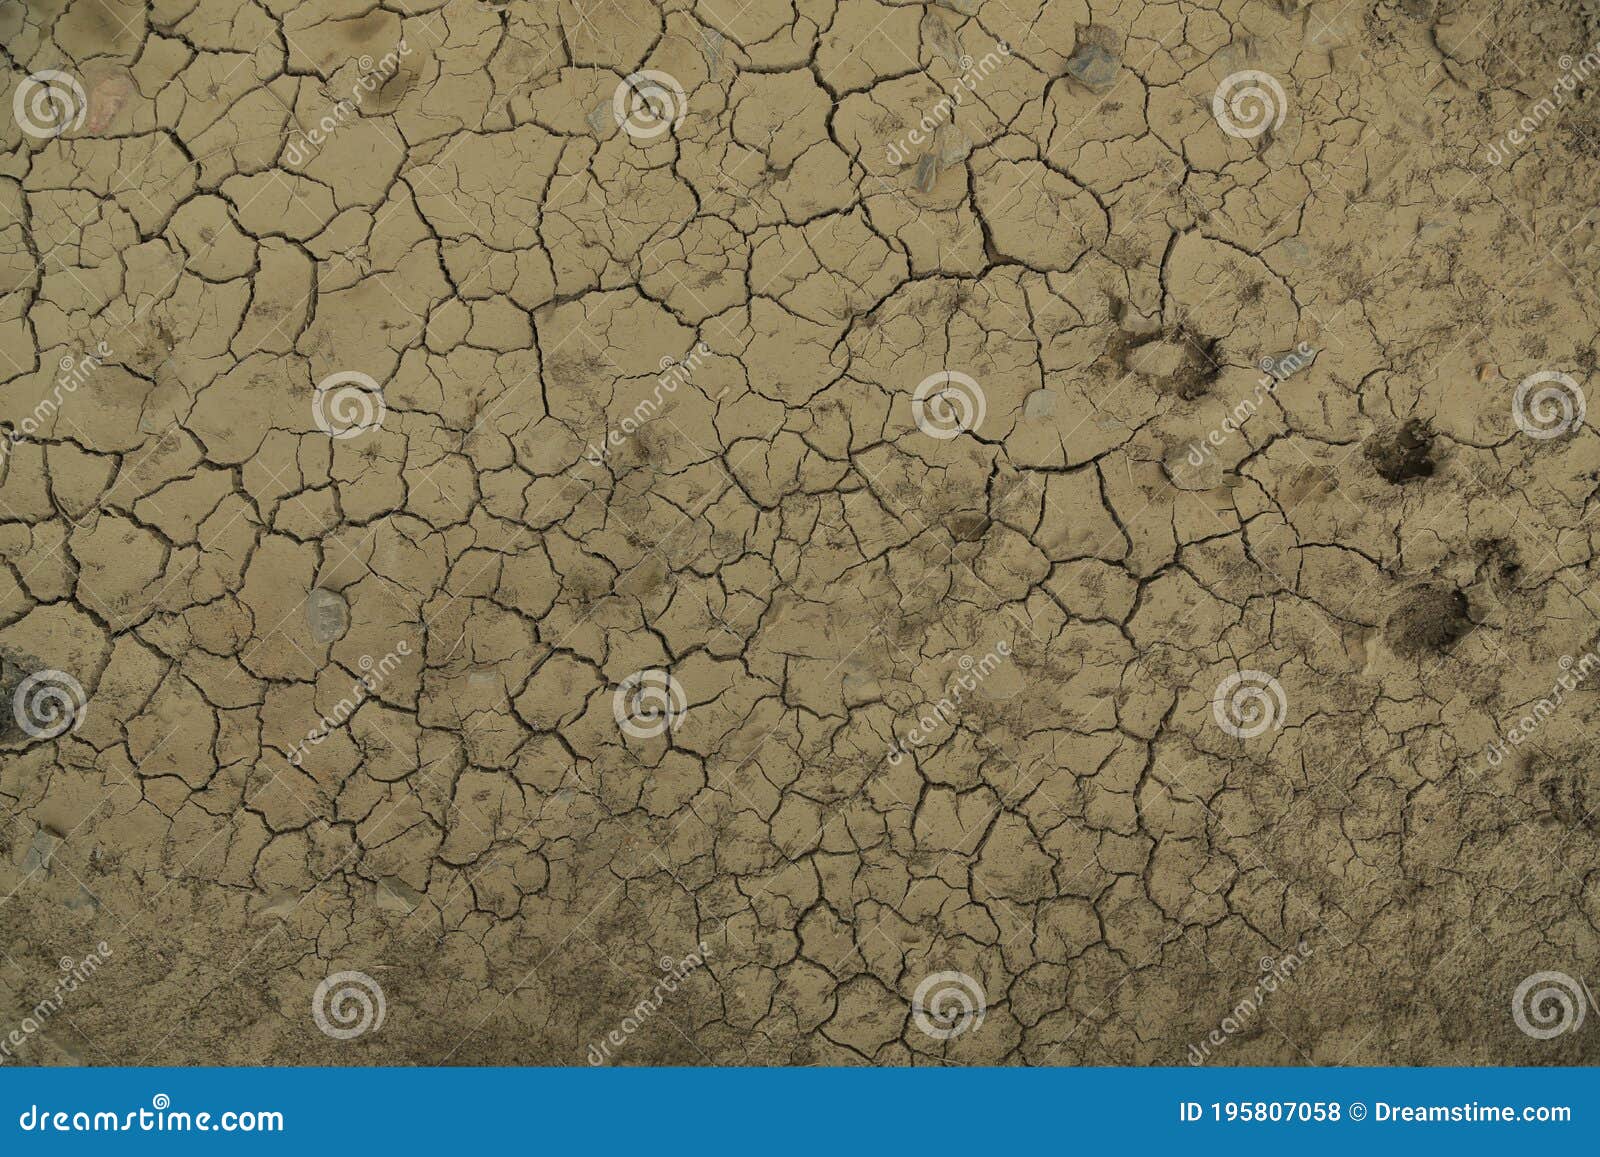 textura de tierra agrietada despuÃÂ©s del efecto de paso del agua, en tonos marrones.